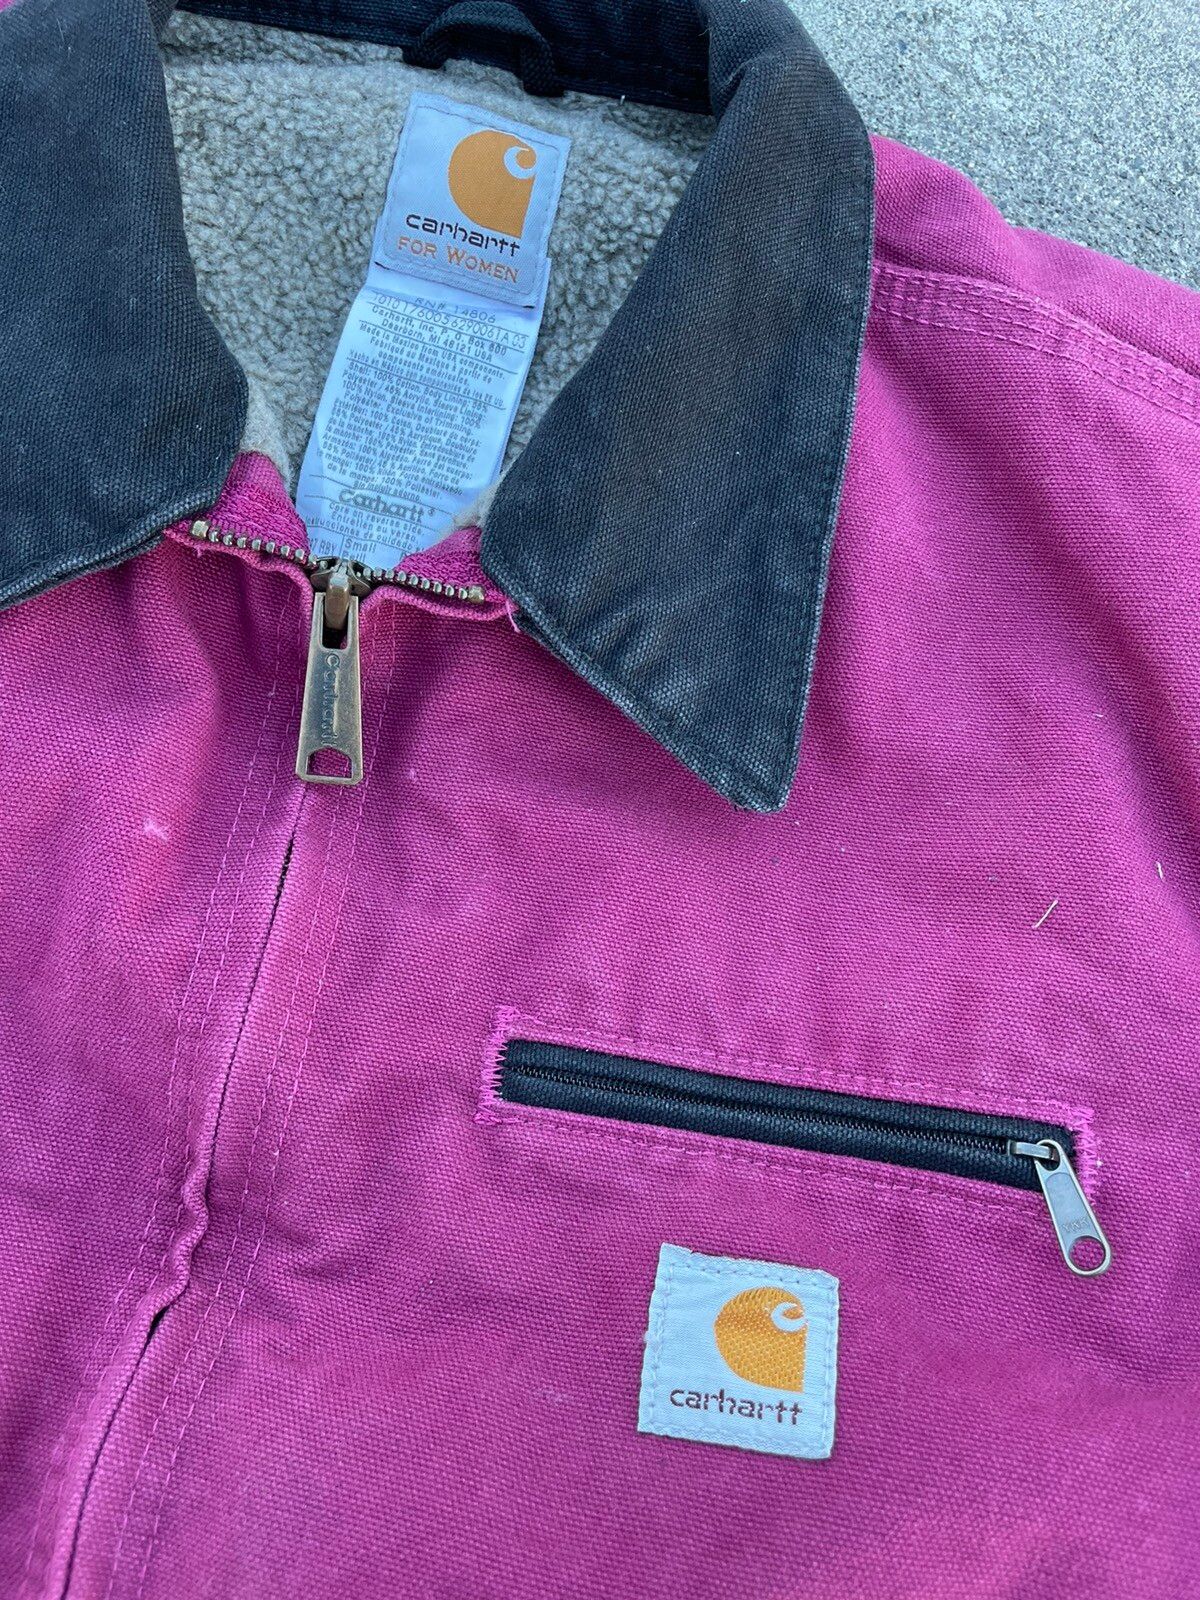 Vintage Vintage Faded Pink Detroit Style Carhartt Jacket Size US S / EU 44-46 / 1 - 2 Preview